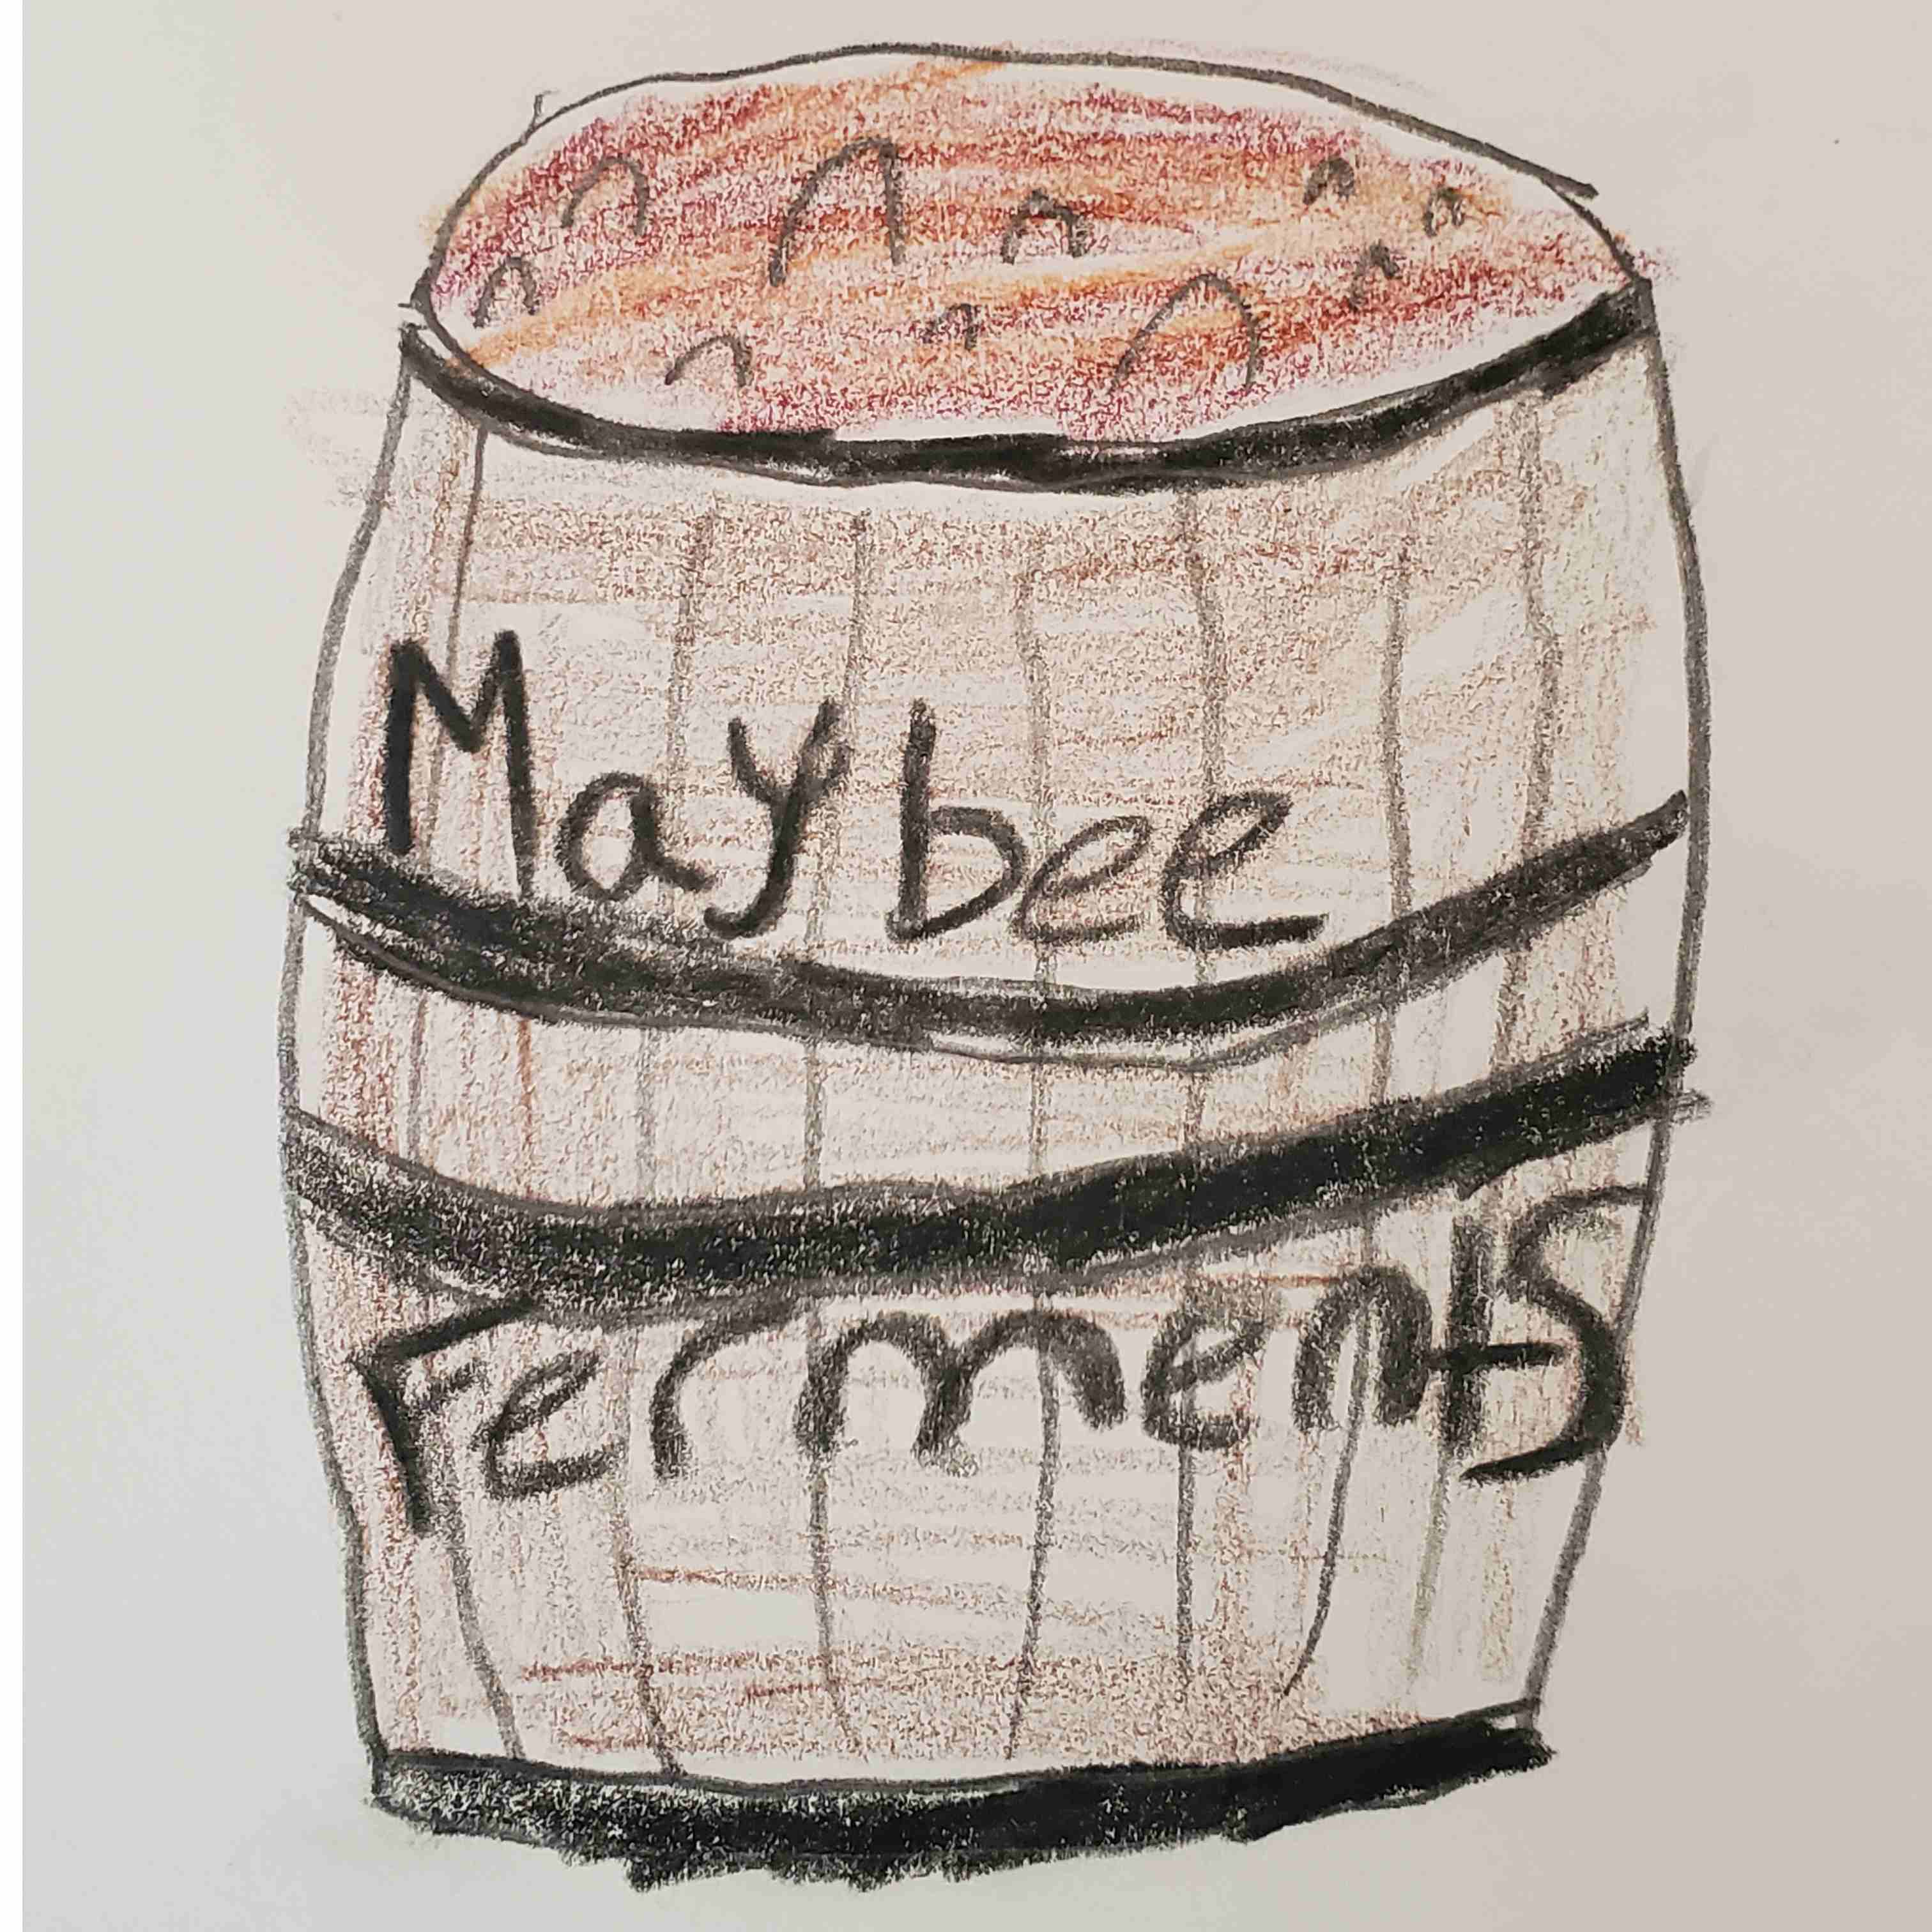 Maybee Ferments